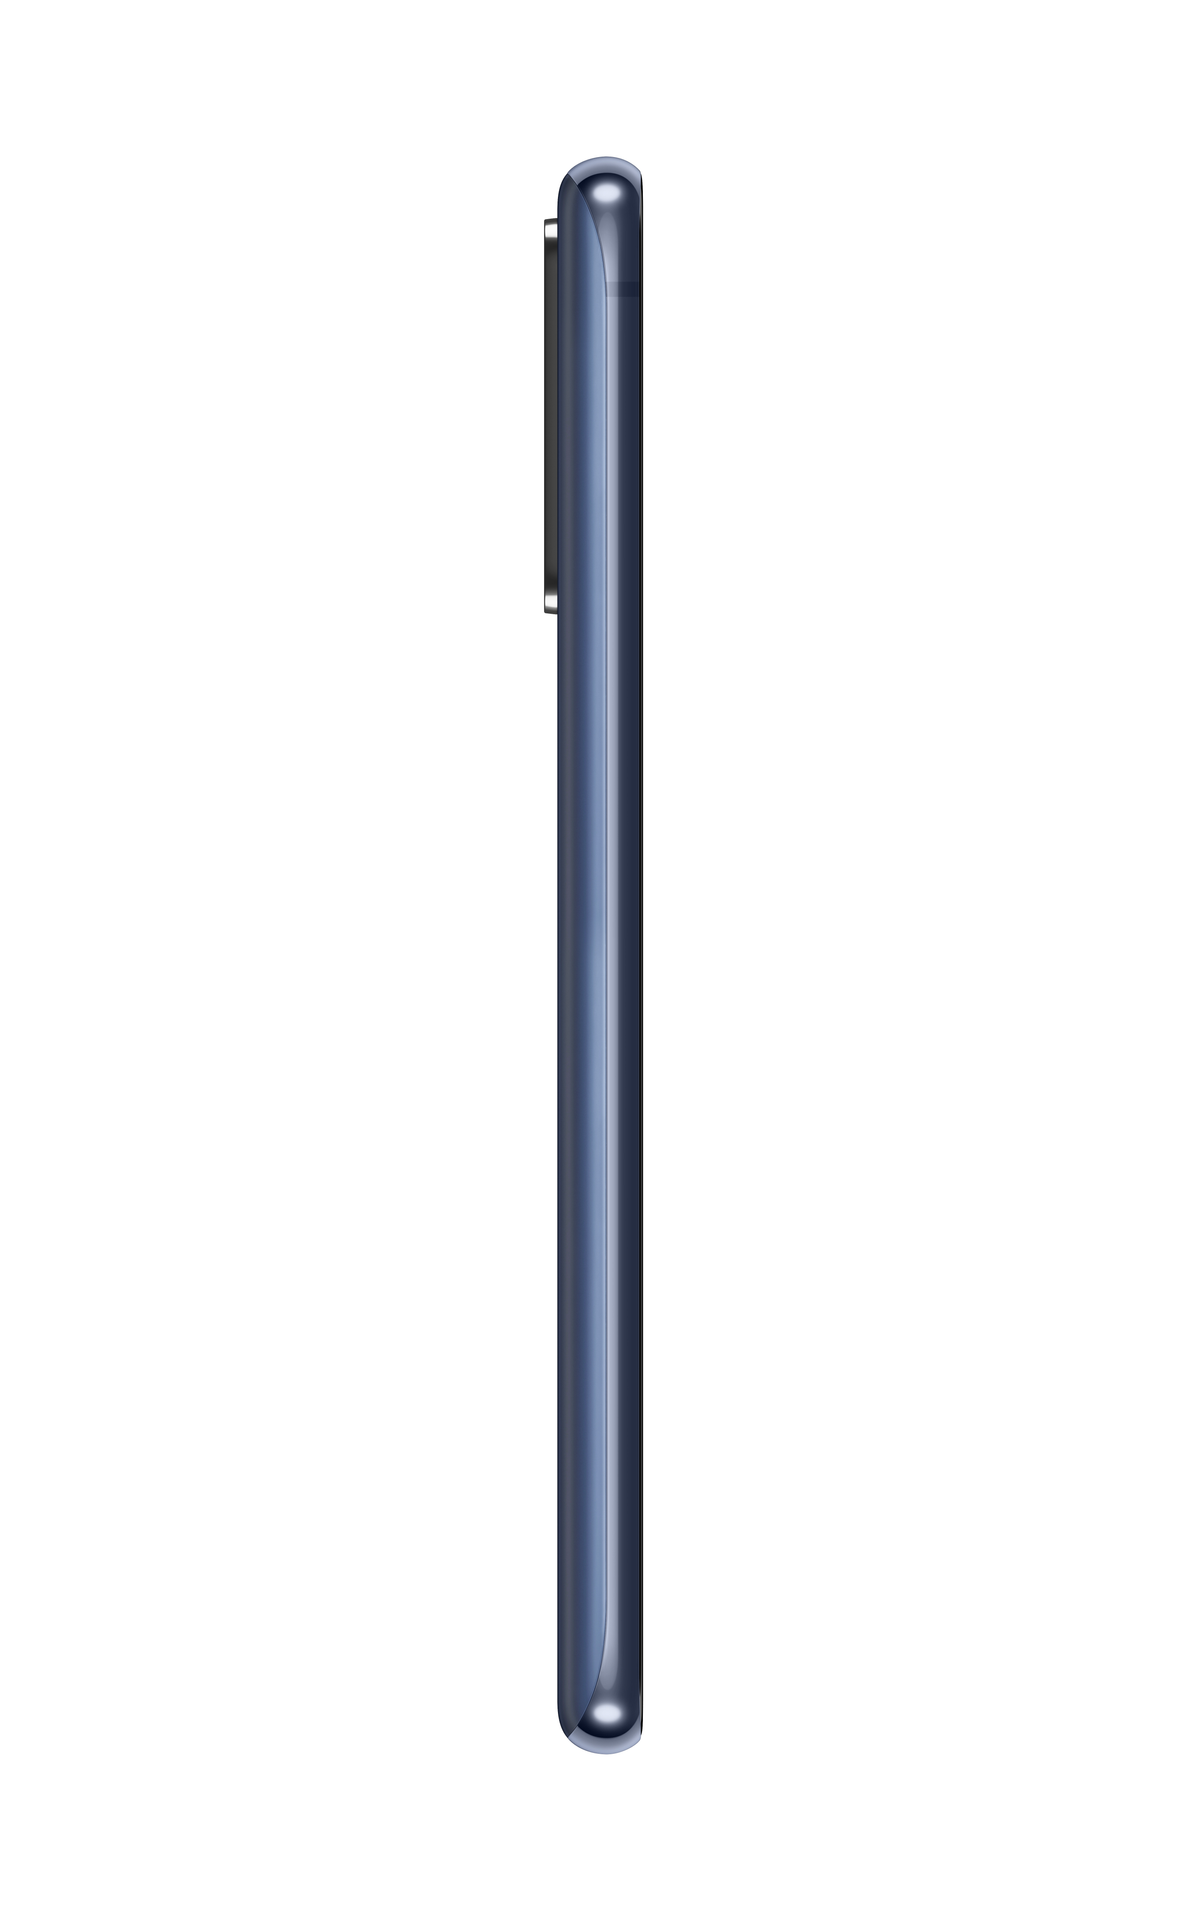 SAMSUNG SM-G780F 6 GB SIM Blau Dual